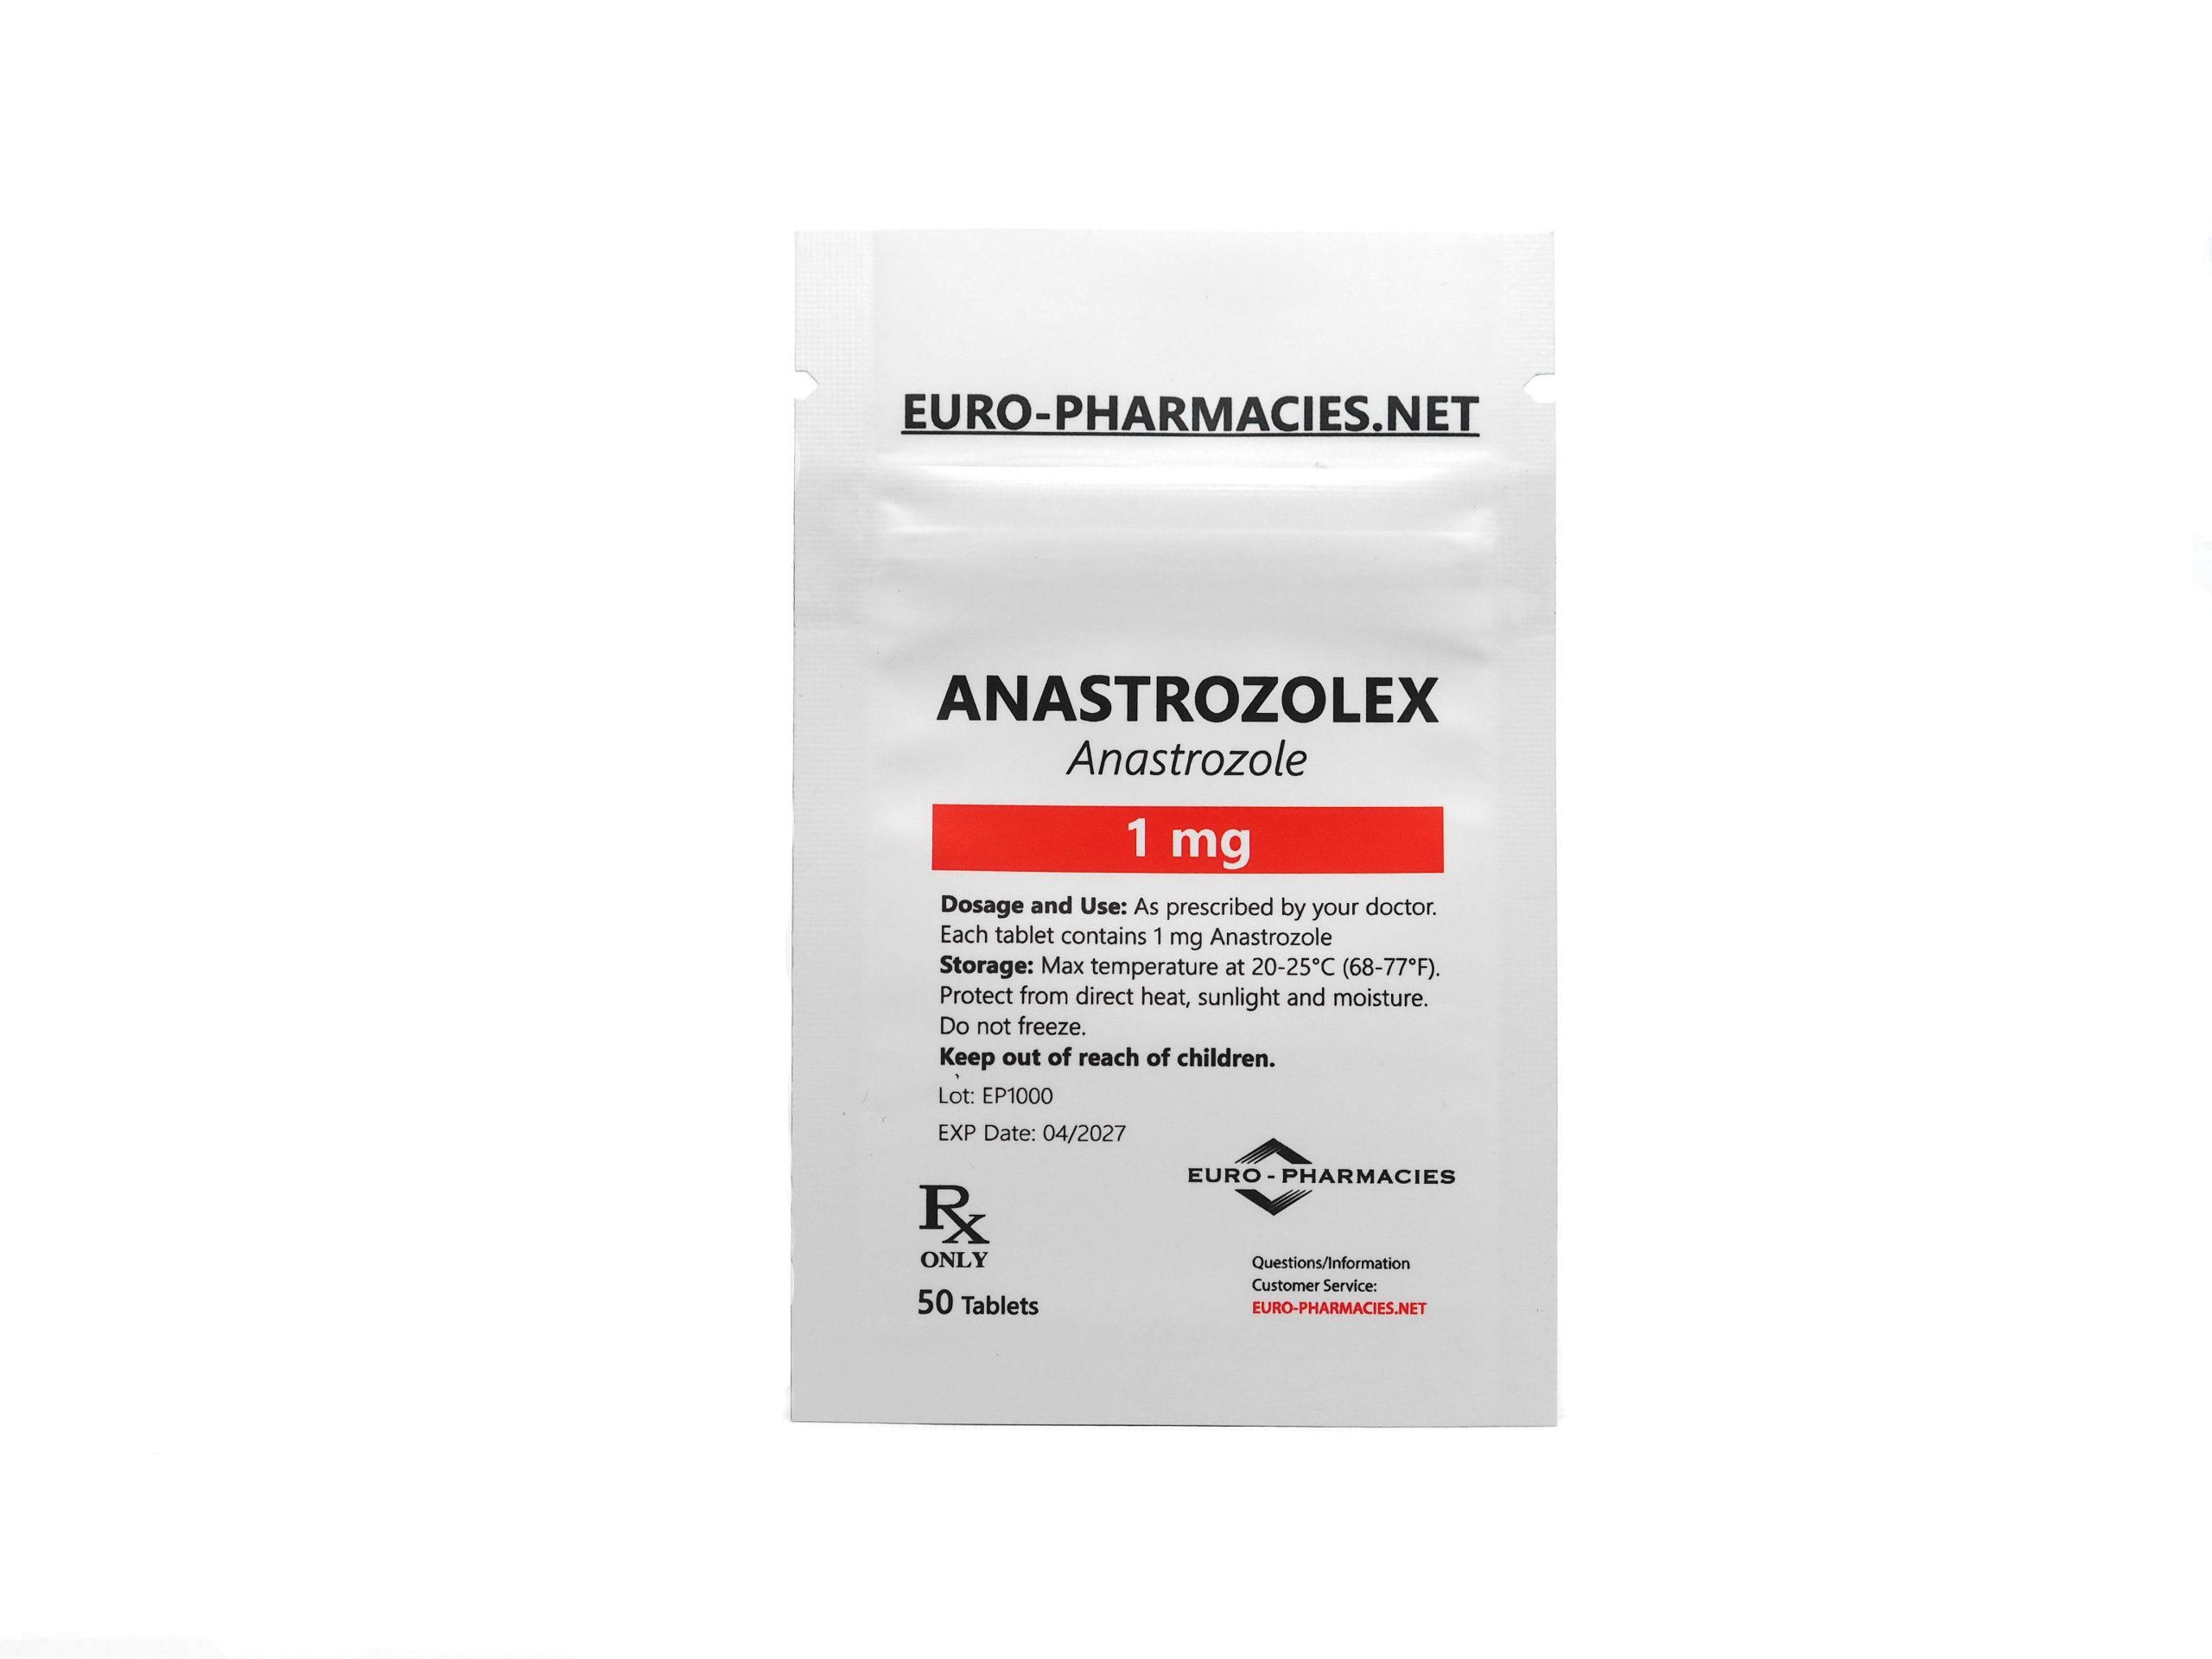 Anastrozolex (Arimidex) 1mg/tab - 50 tab/bag